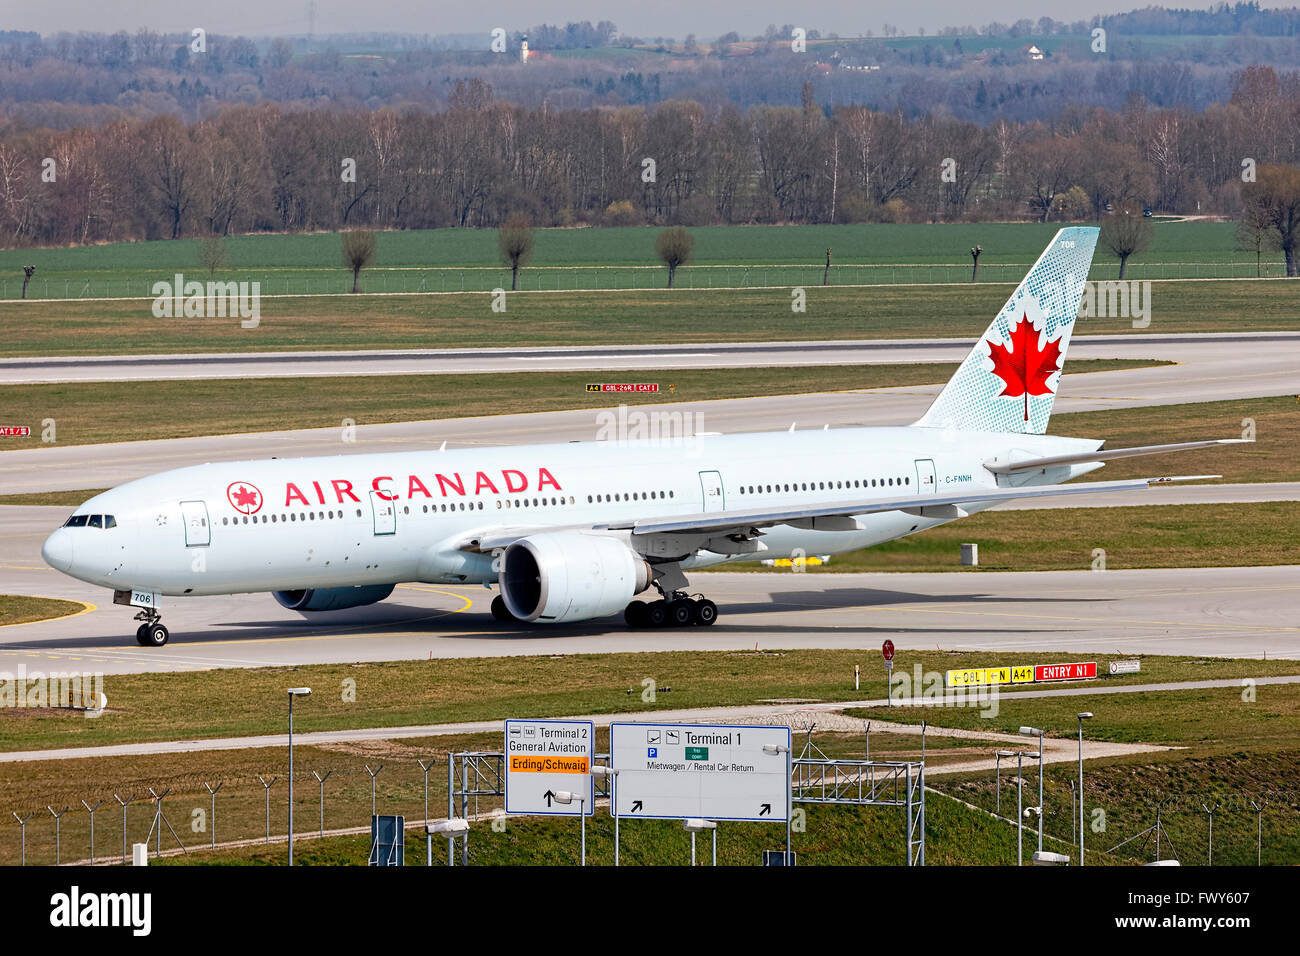 Air Canada Boeing 777-233 LR aircraft taxiing, Franz Josef Strauss Airport, Munich, Upper Bavaria, Germany, Europe. Stock Photo